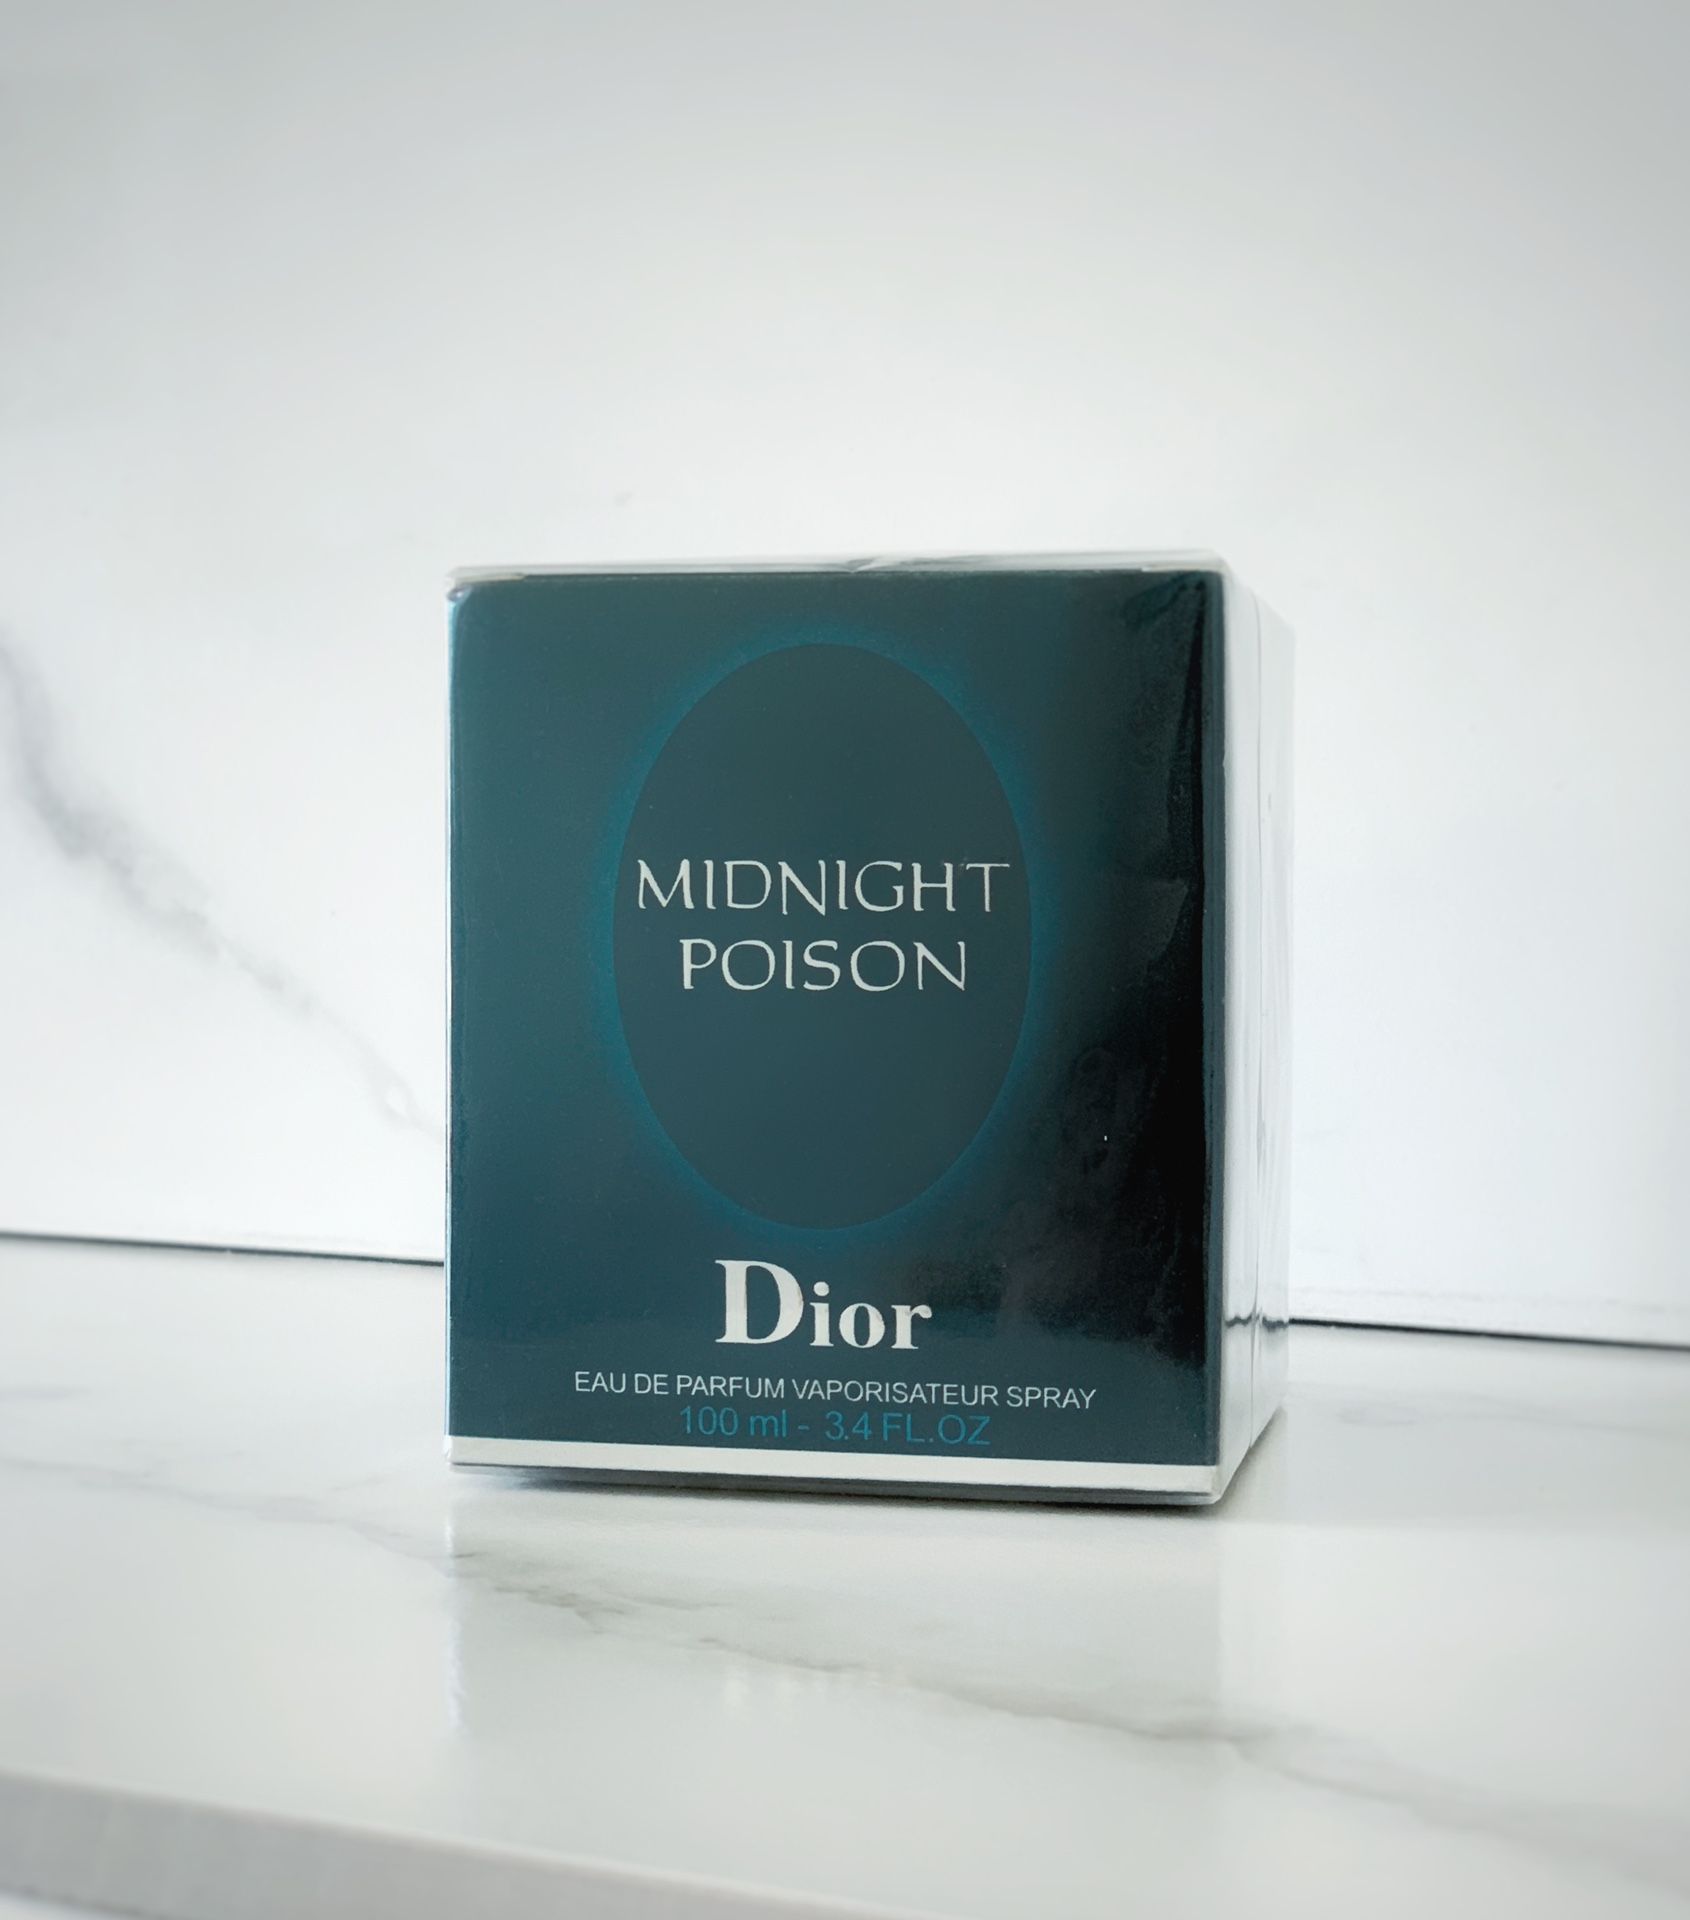 Rare midnight poison by Dior perfume